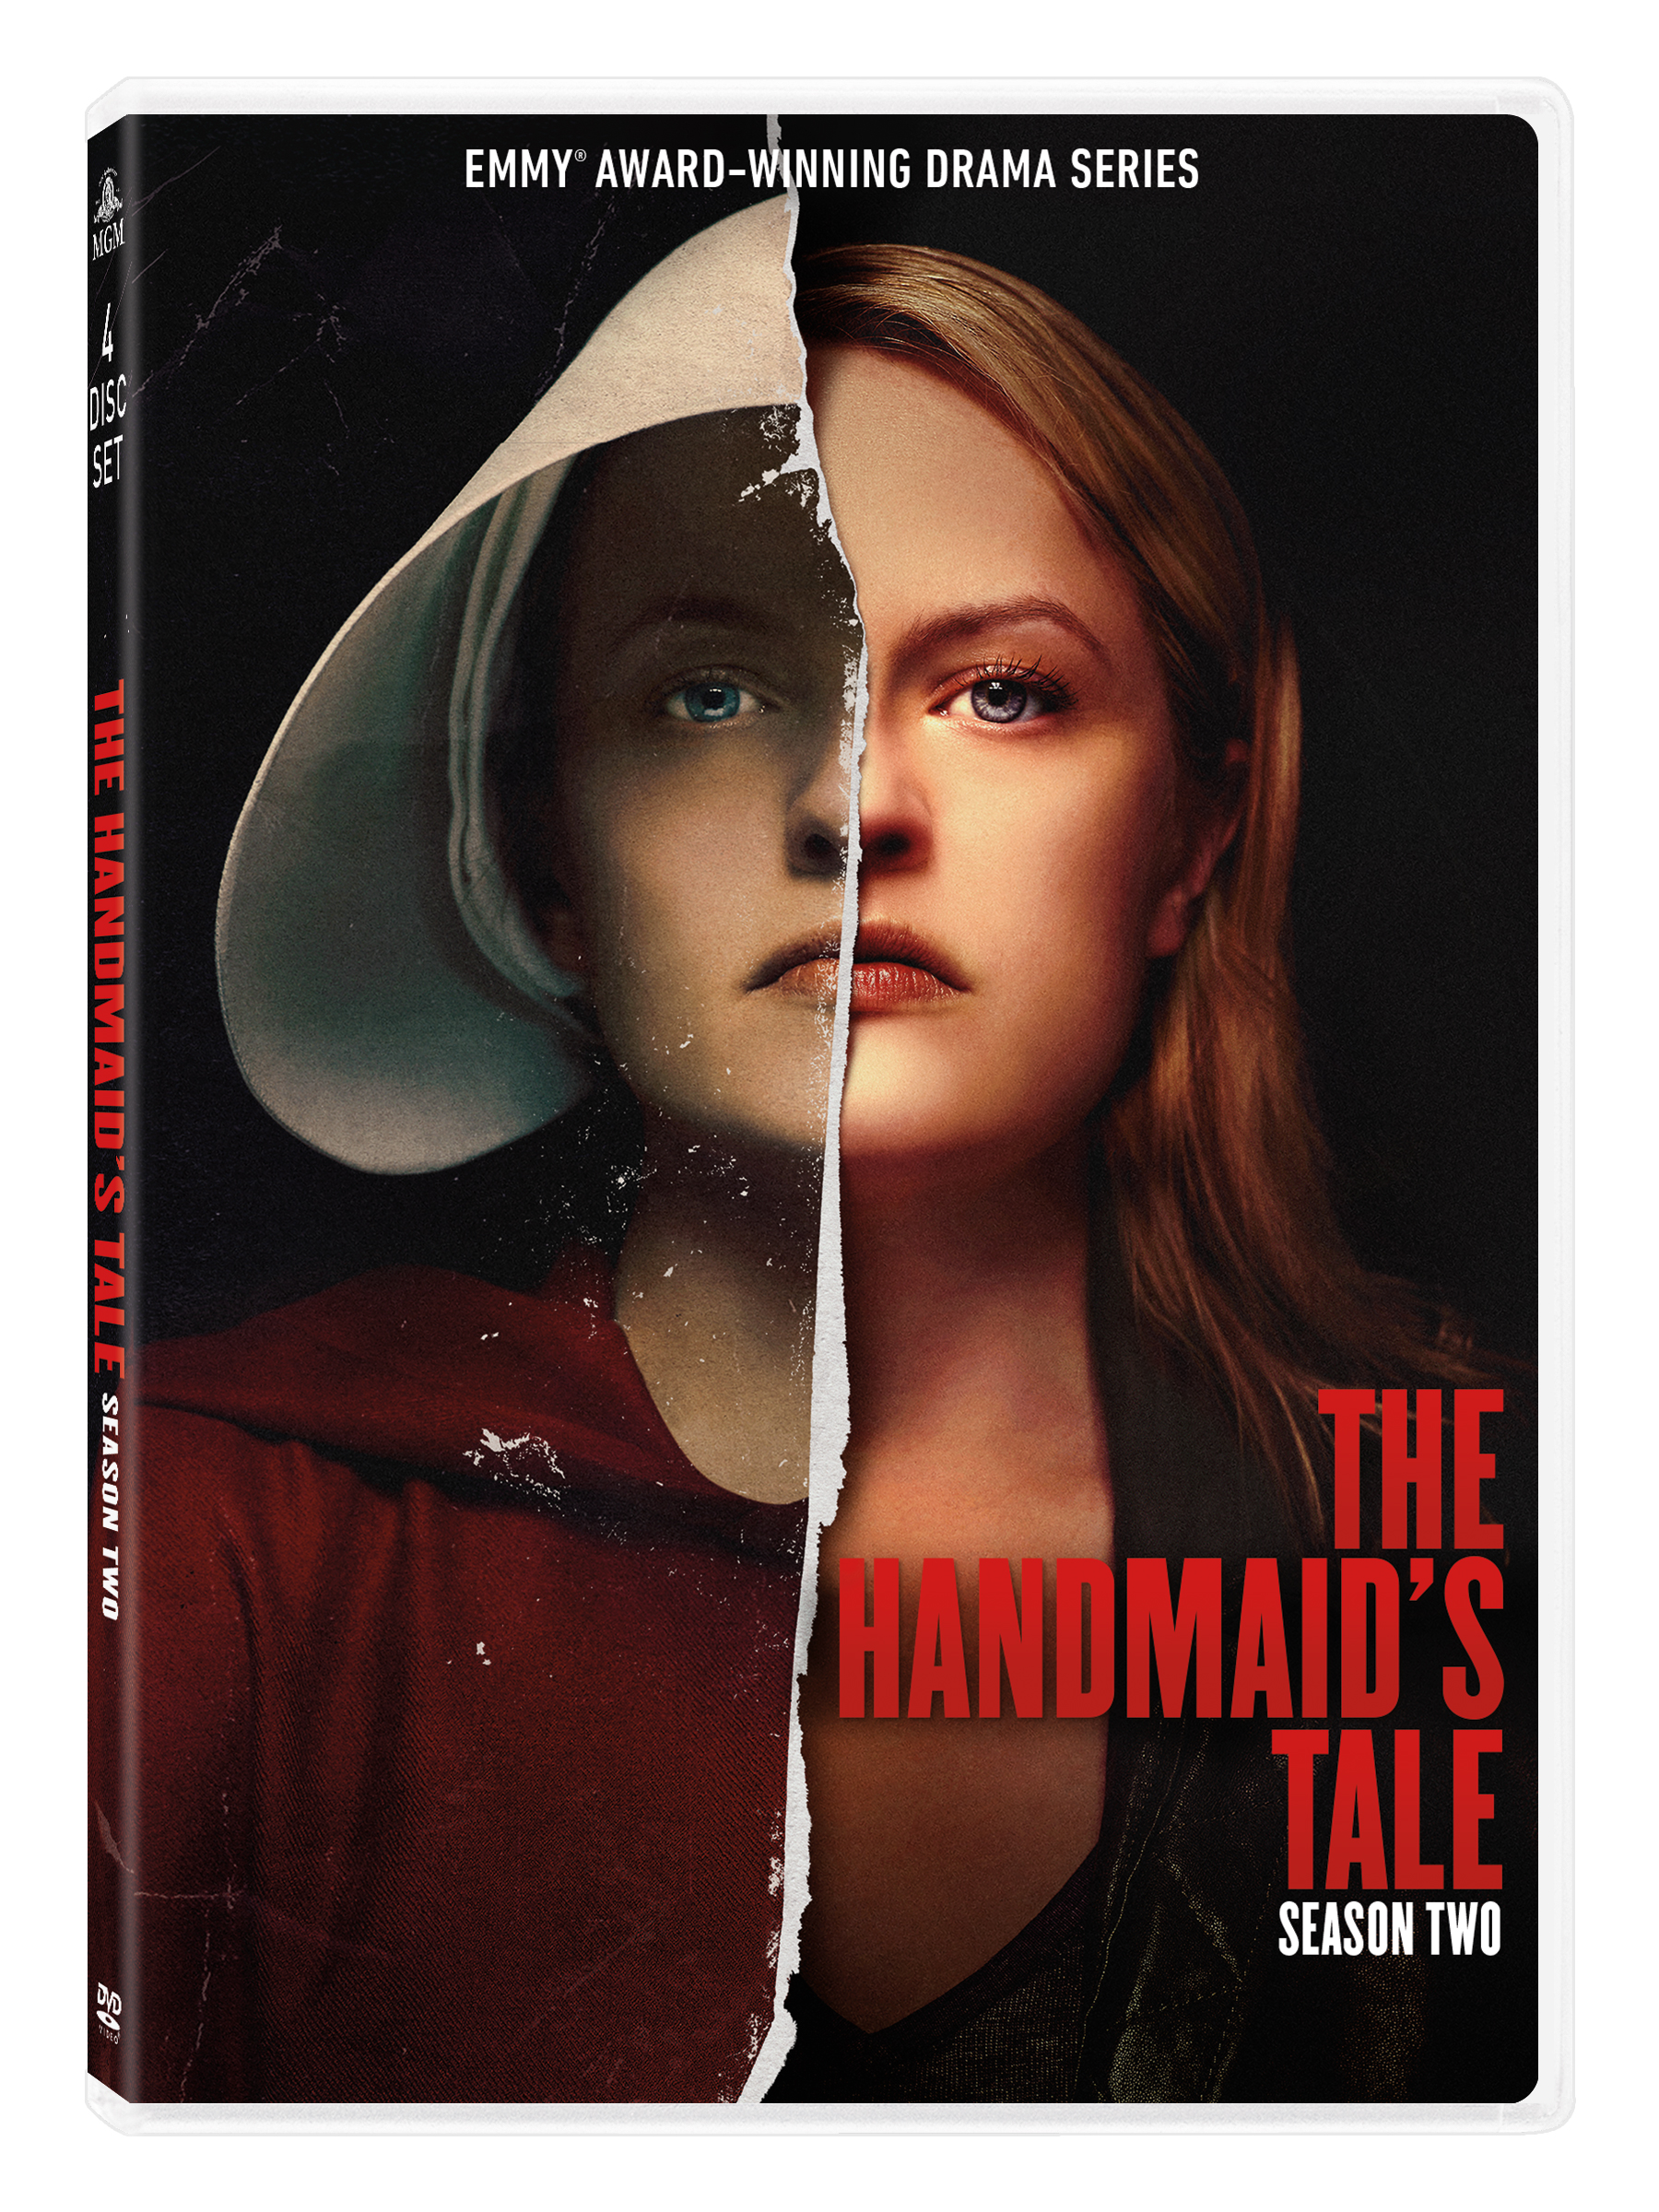 The Handmaid's Tale Season 2 DVD cover (20th Century Fox Home Entertainment)